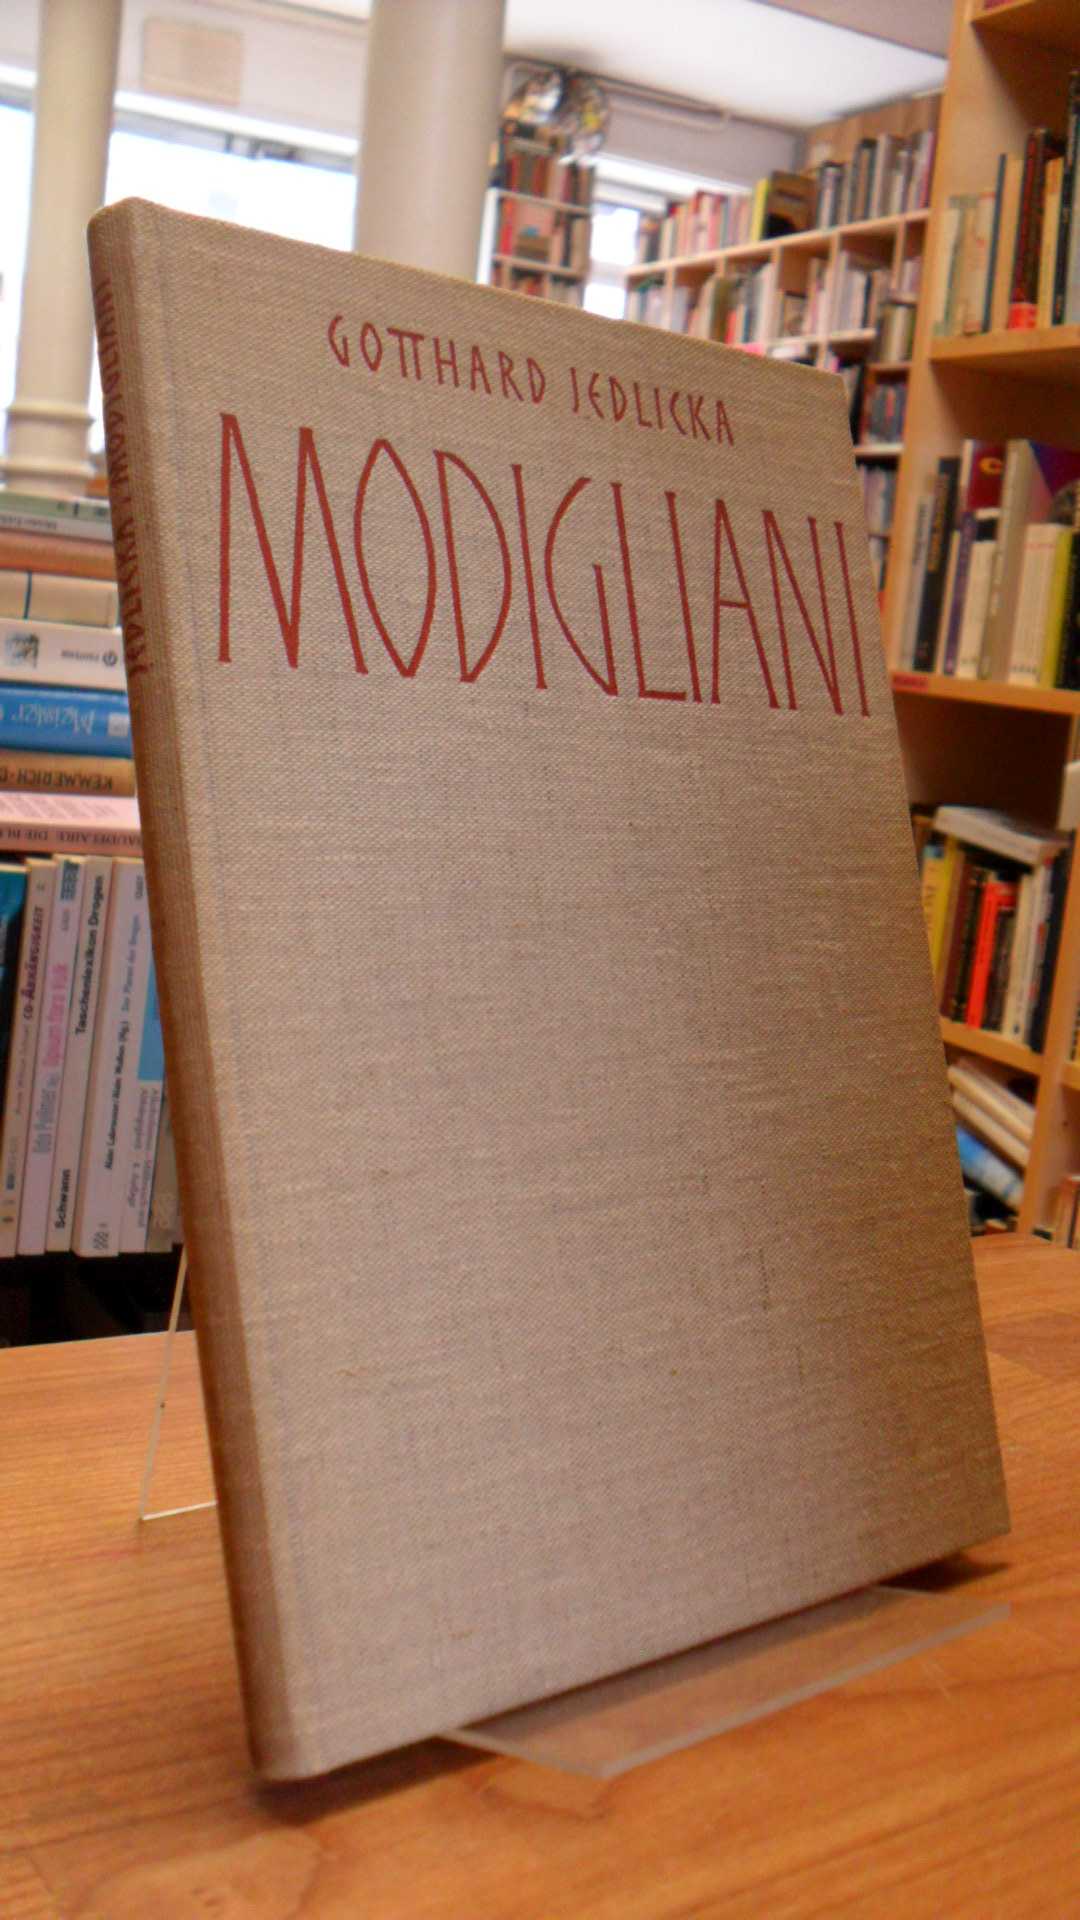 Jedlicka, Modigliani – 1884-1920,